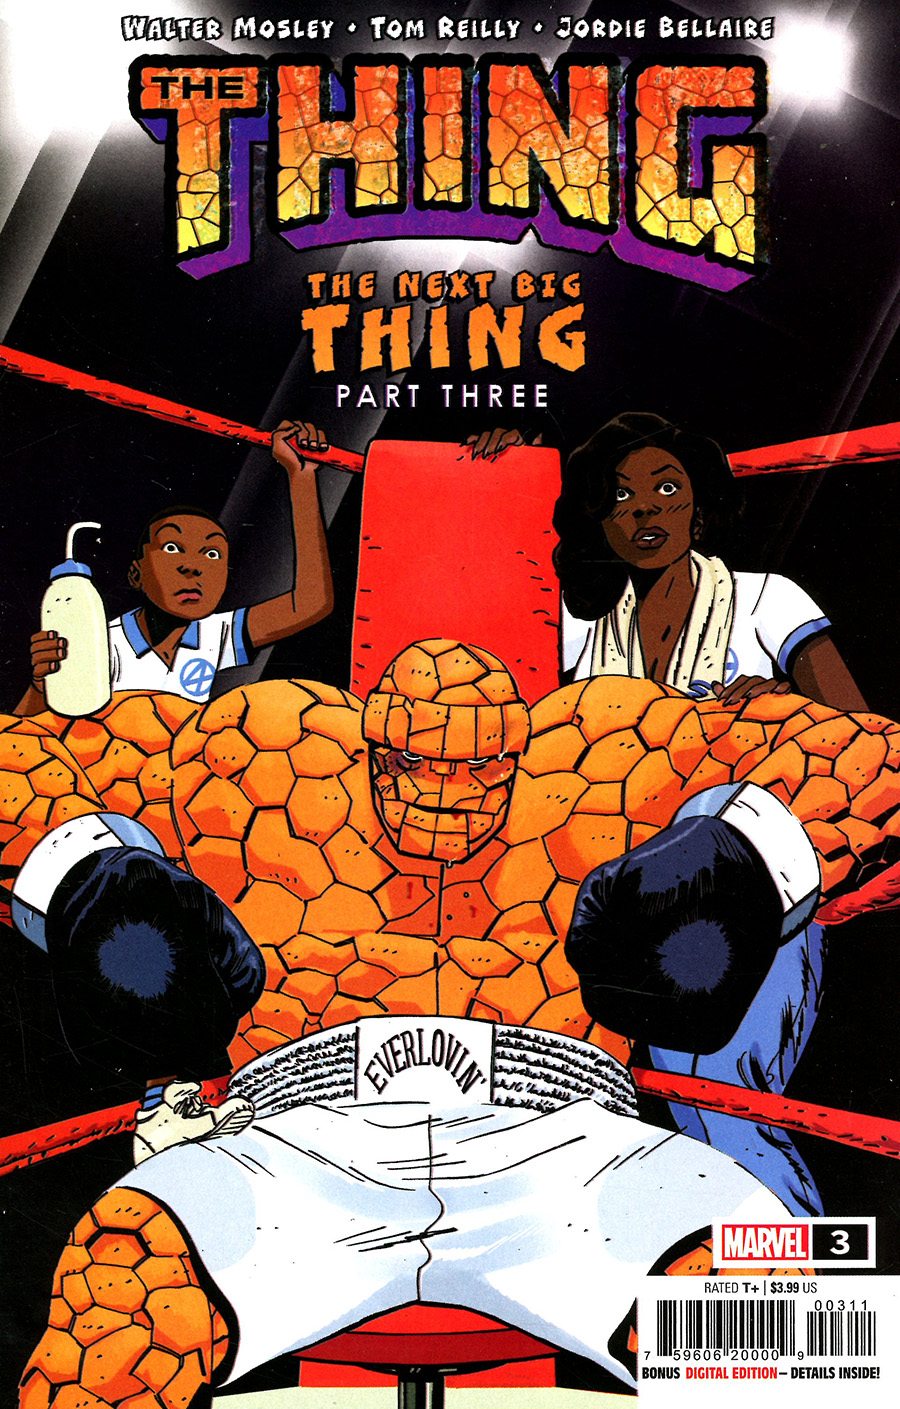 Thing Vol 3 #3 Cover A Regular Tom Reilly Cover